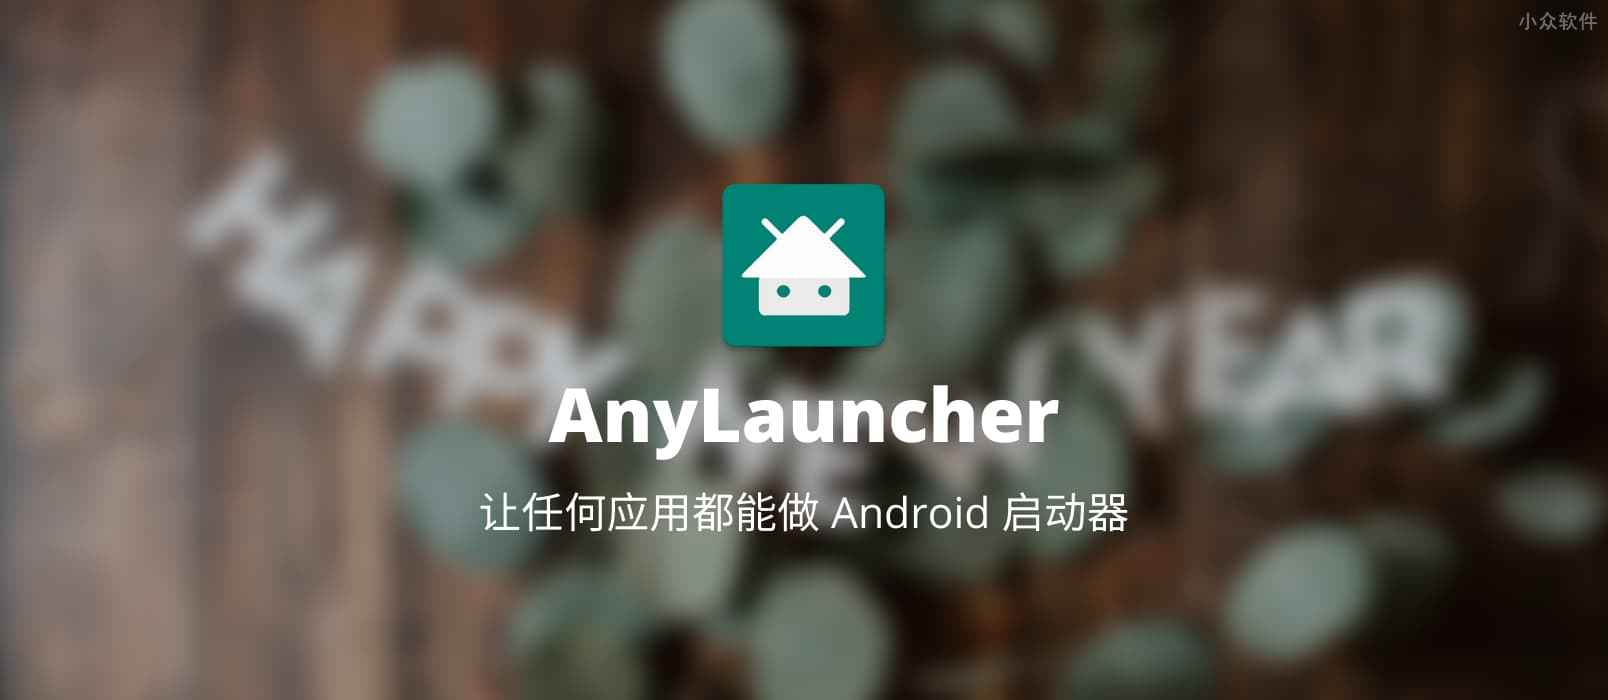 AnyLauncher - 让任何应用都能做 Android 启动器[备机/专用机必备] 1